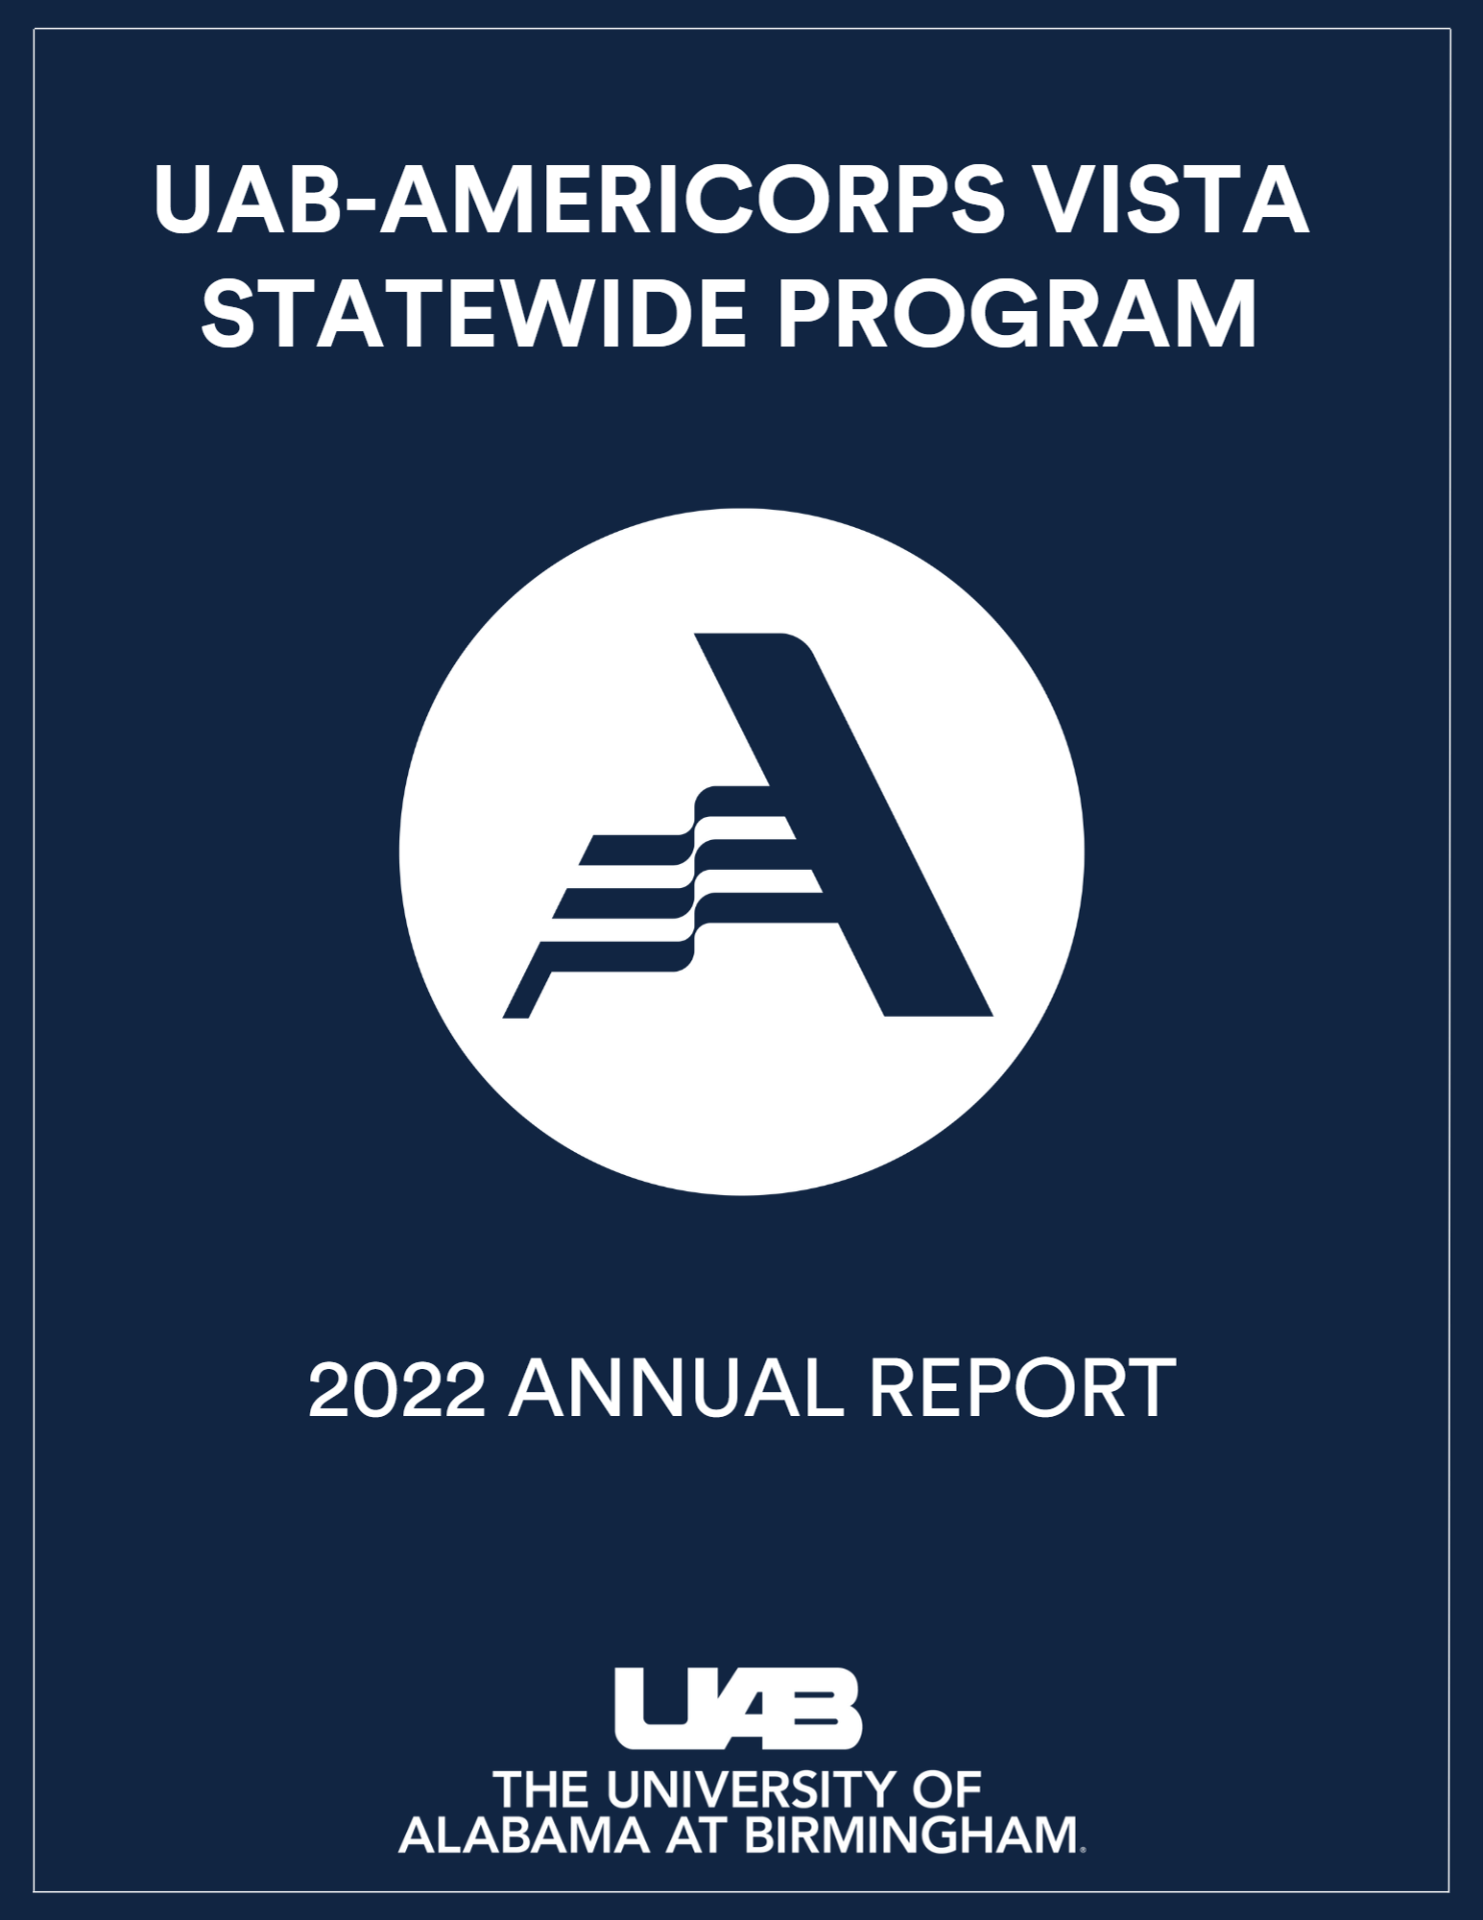 2022 ANNUAL REPORT